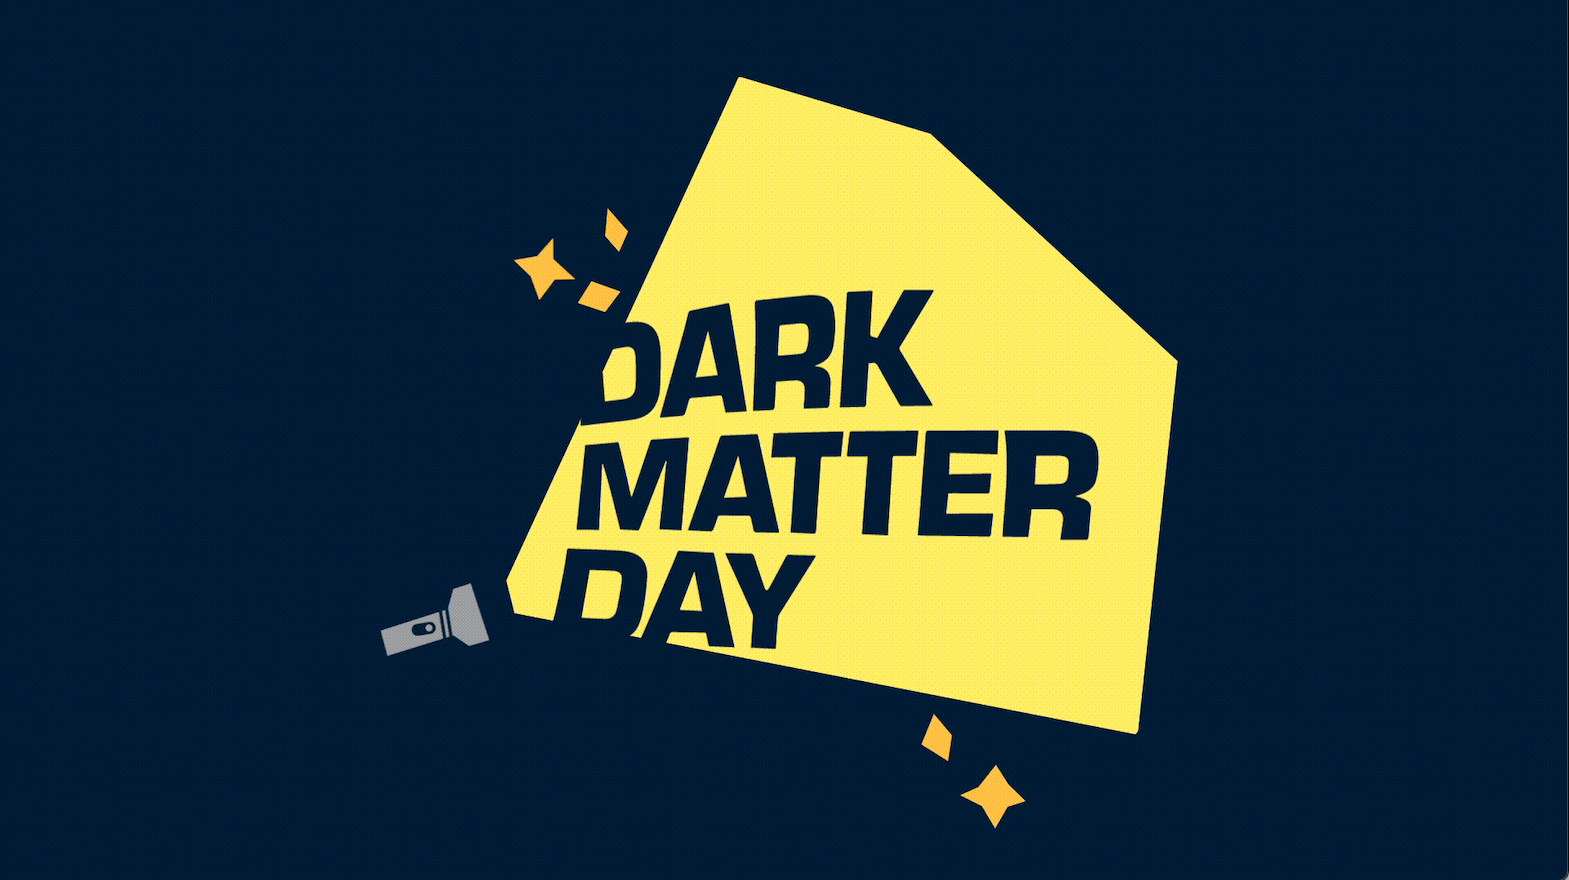 Dark Matter Day logo